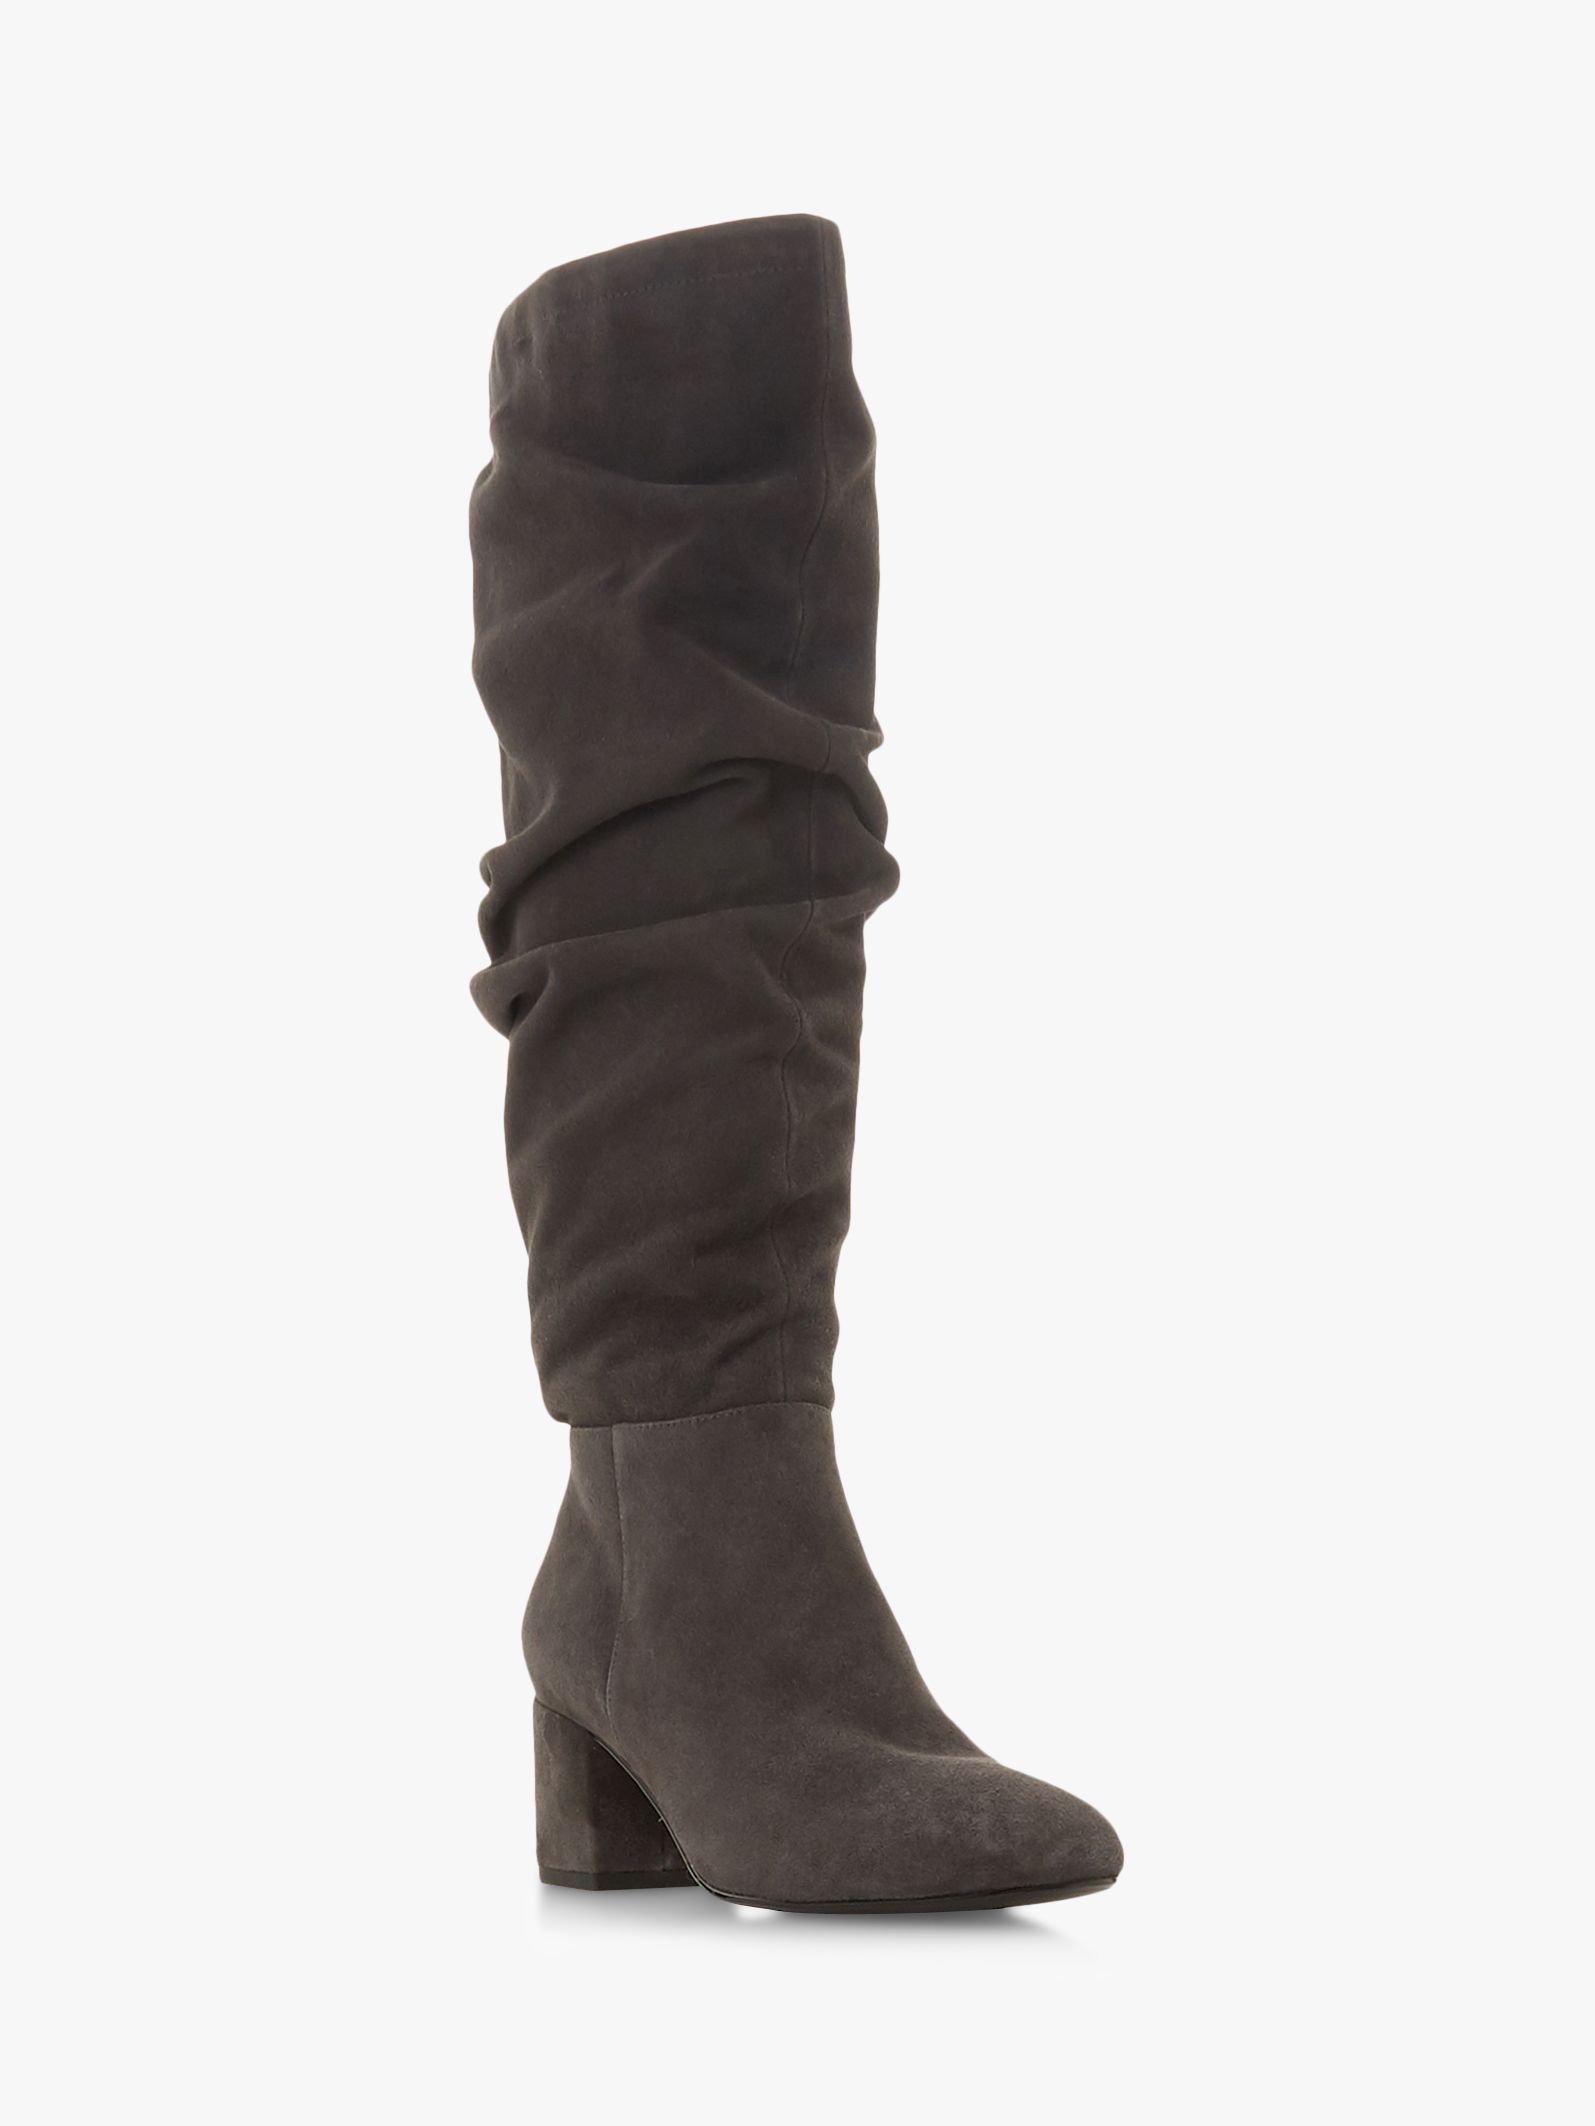 Dune Sarento Ruched Knee High Boots, Grey Suede, 3